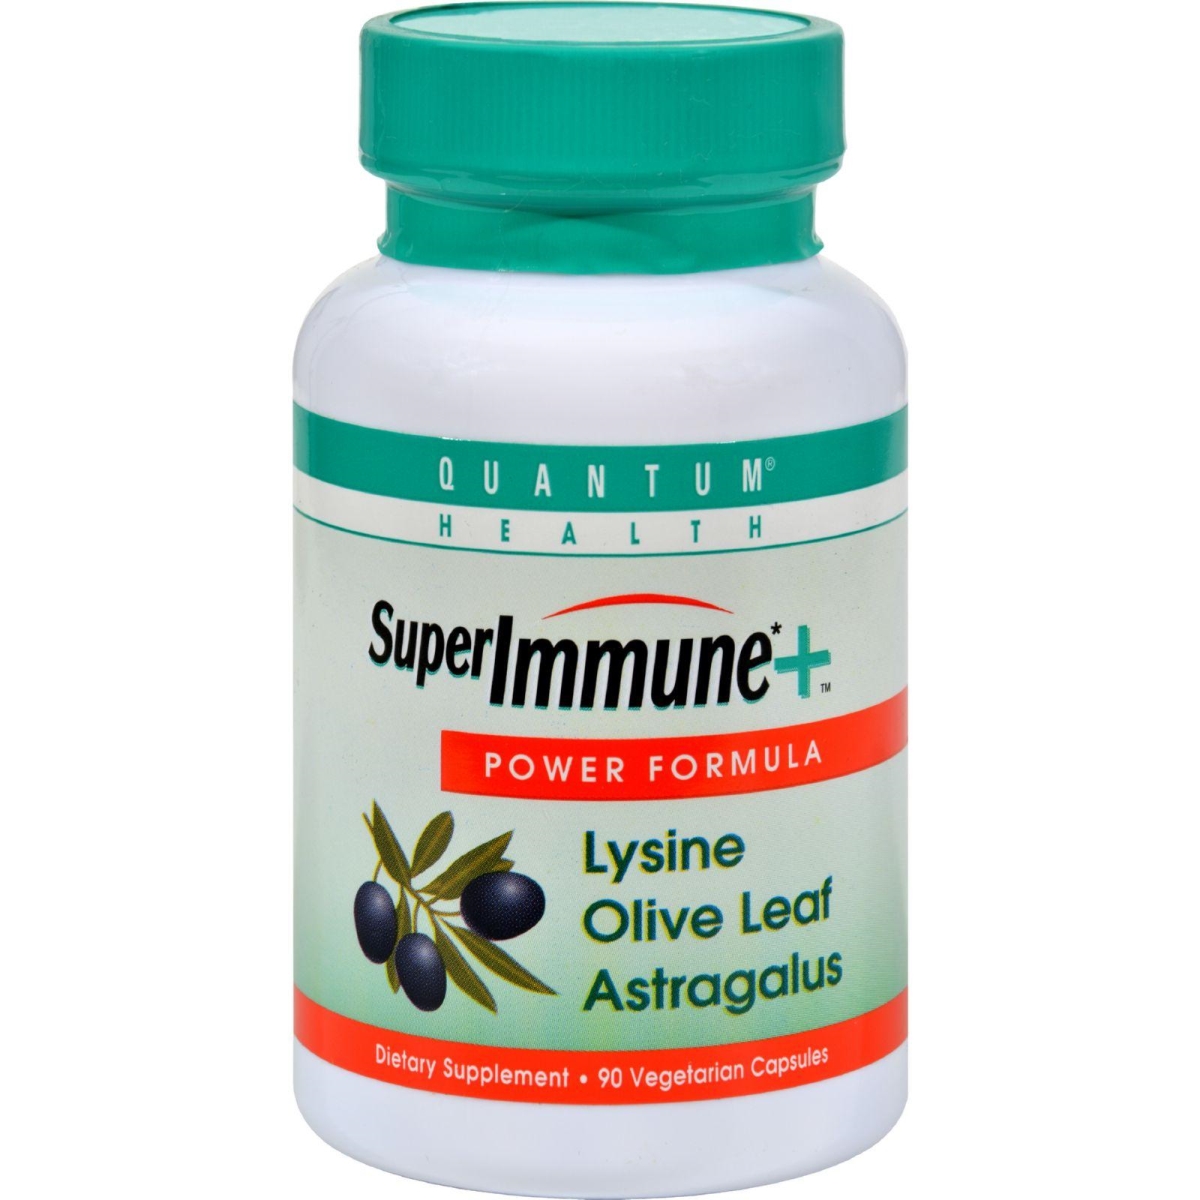 Hg0238964 Superimmune Plus Power Formula, 90 Vegetarian Capsules